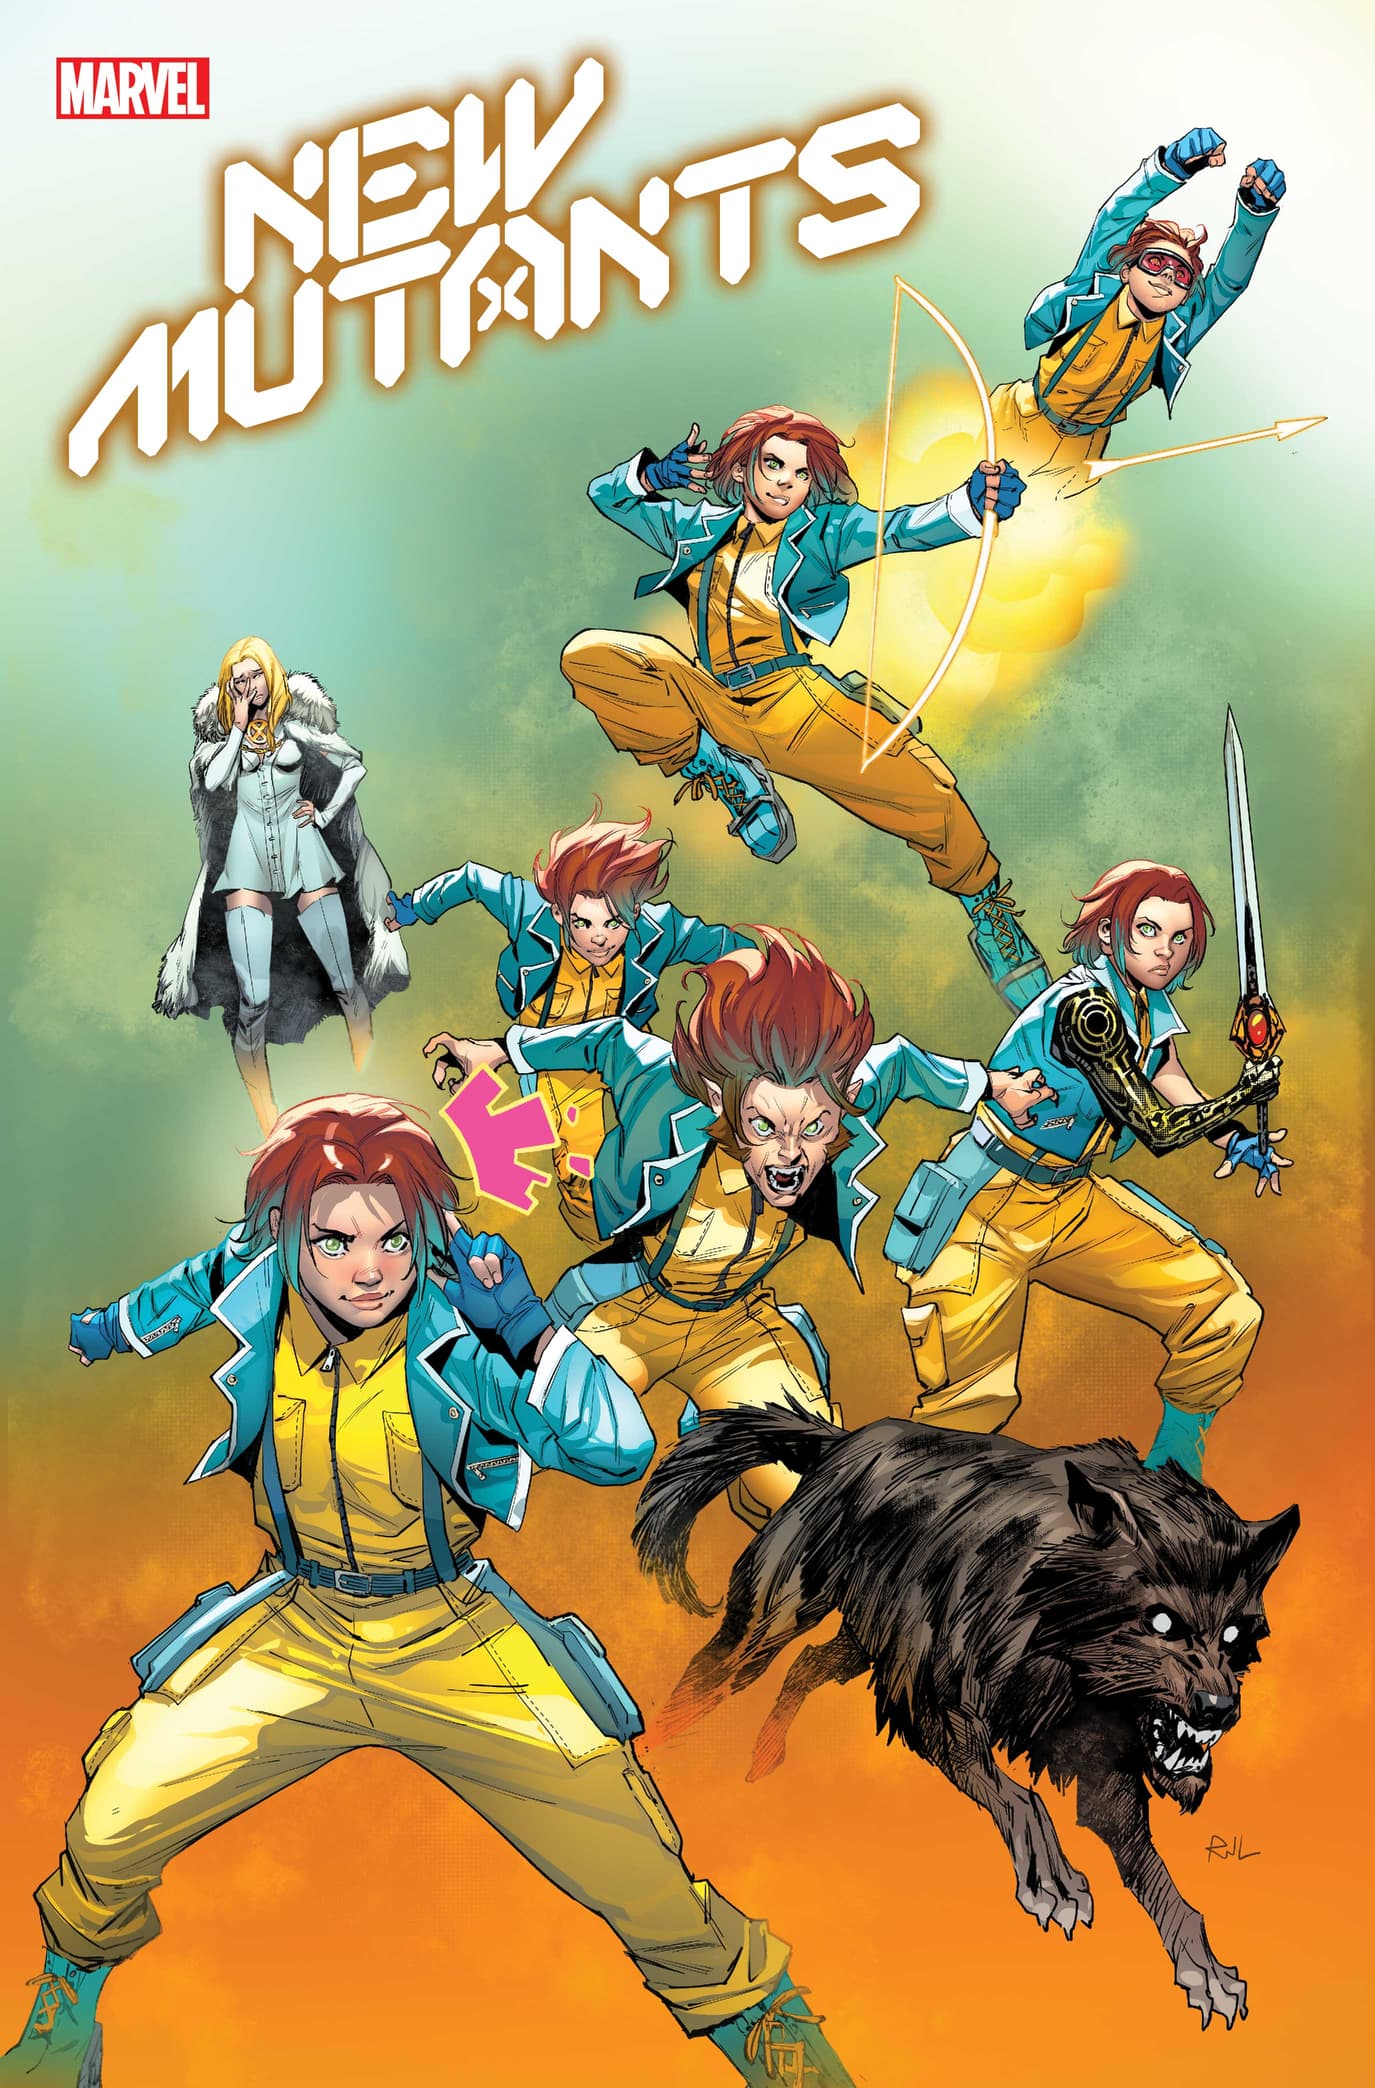 New Mutants #31 cover by Rafael De Latorre